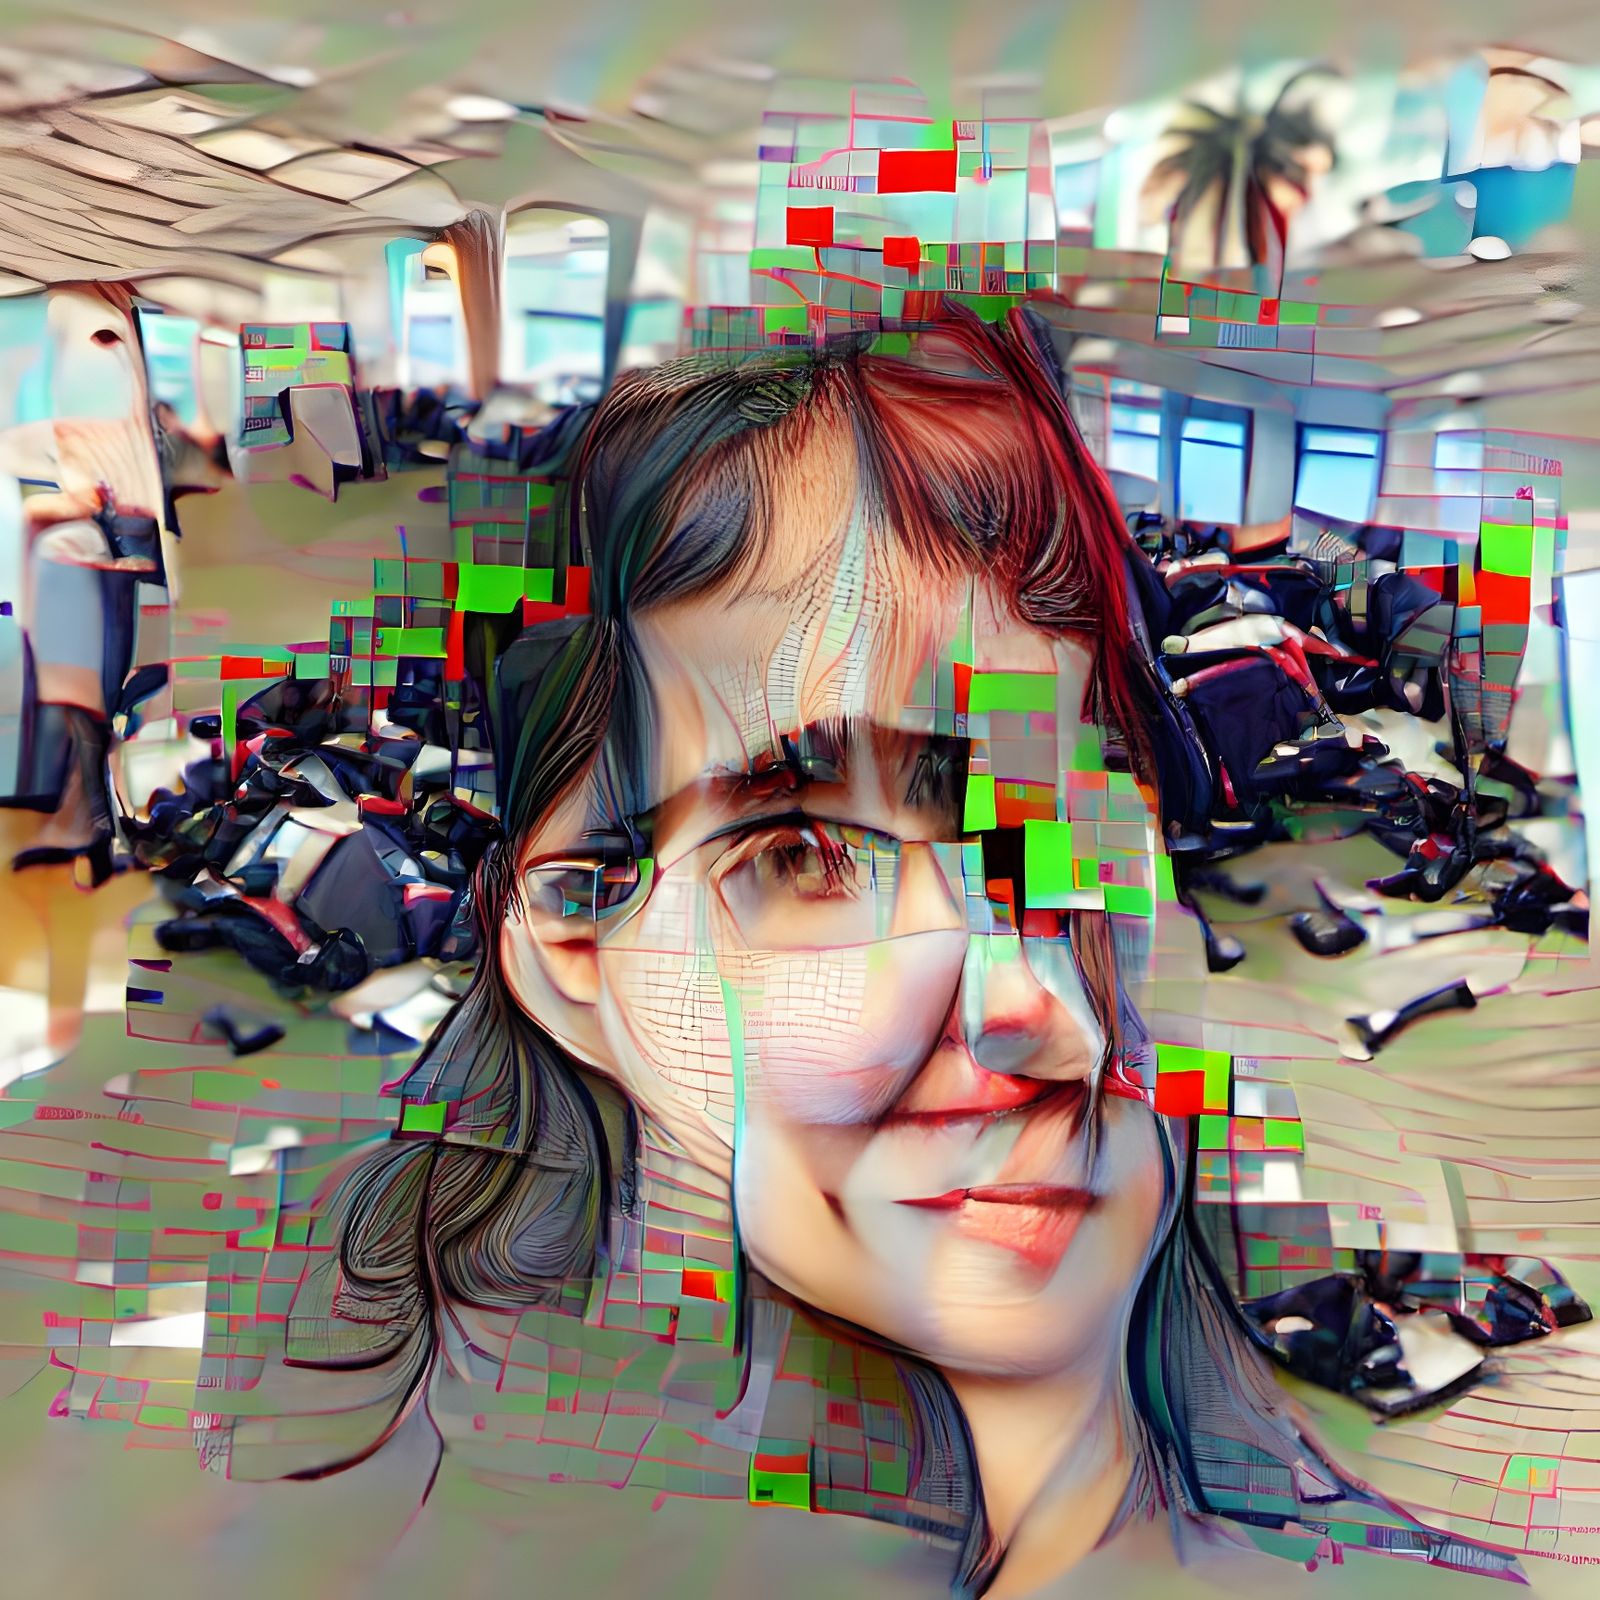 jpeg compression artifacts